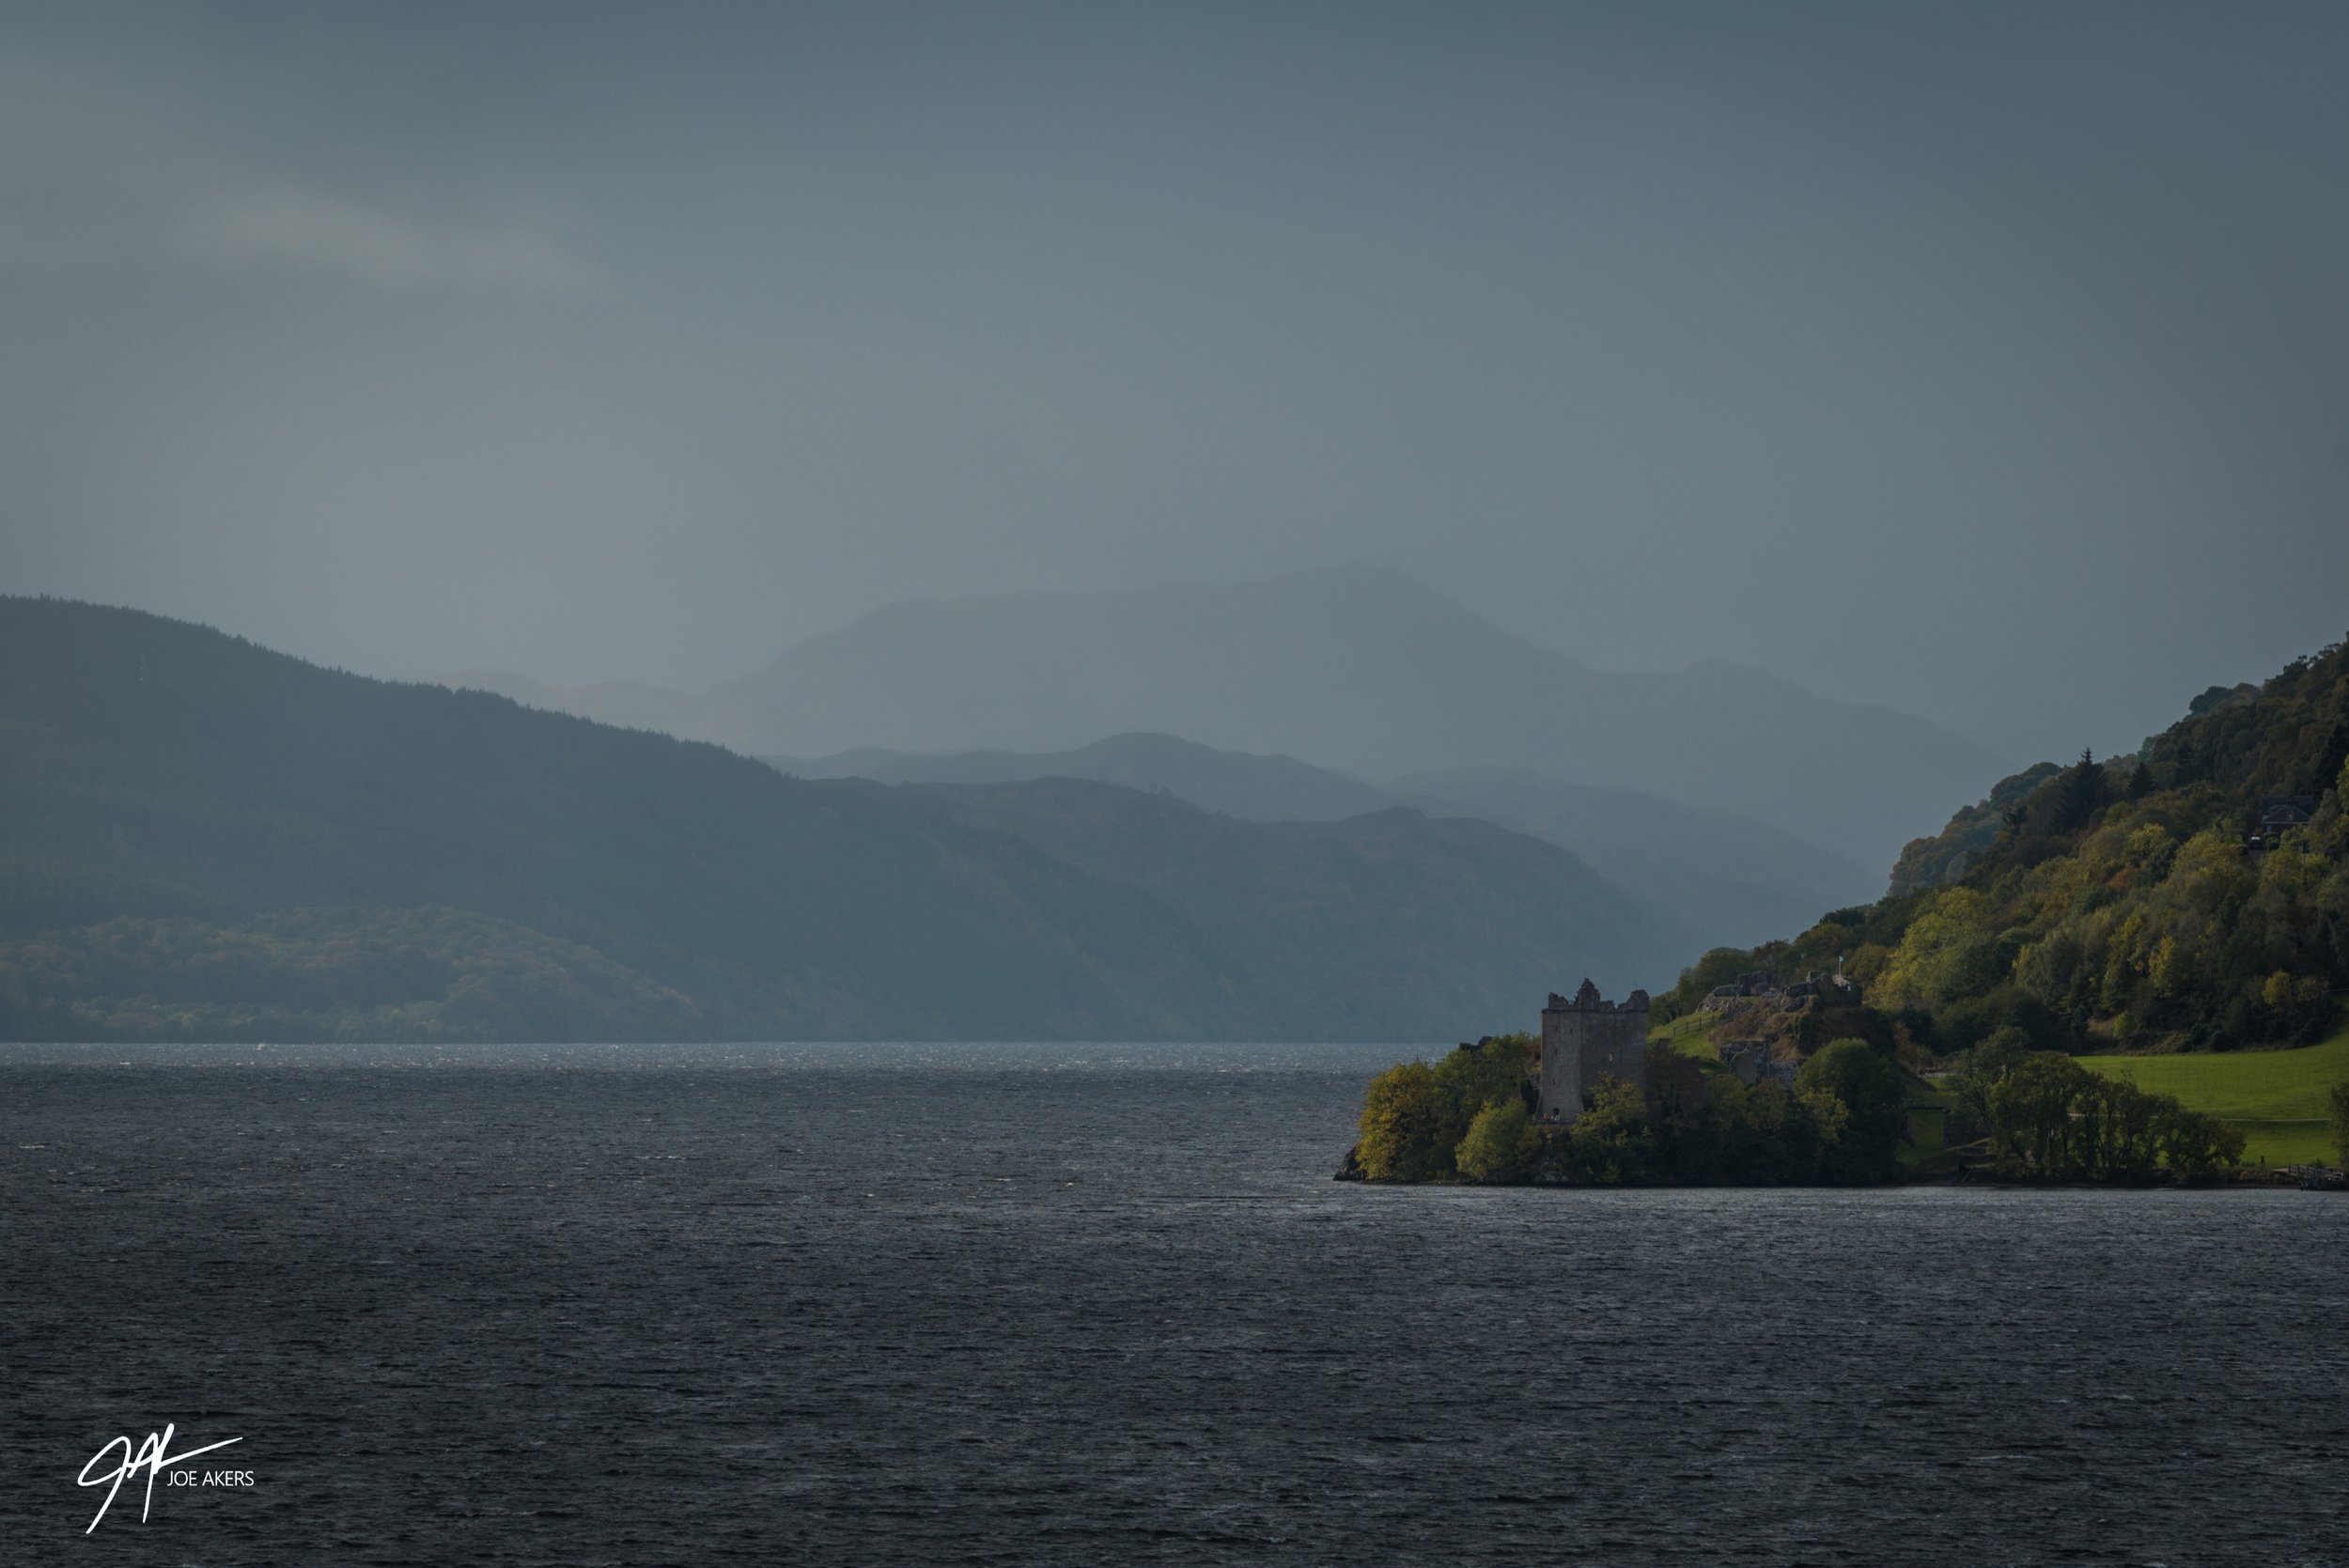 Loch Ness, Scotland - Oct. 2022